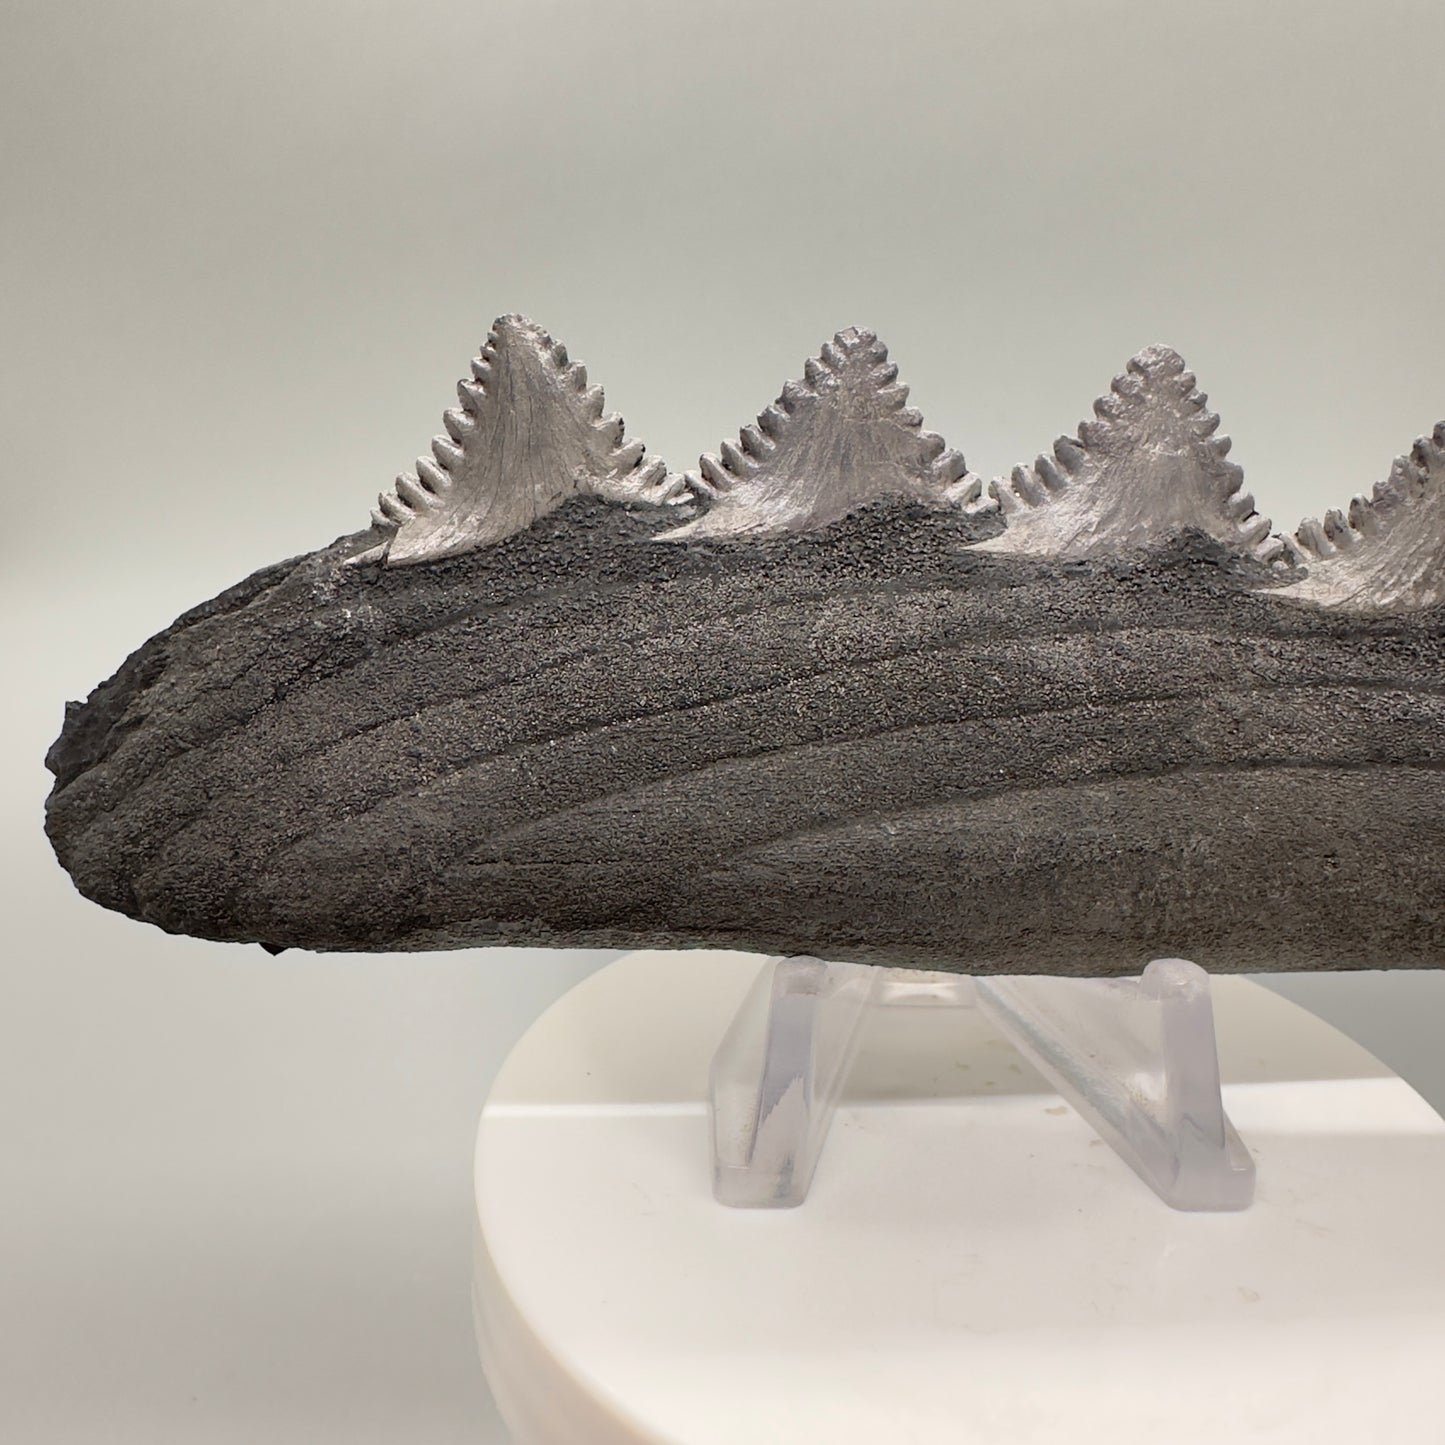 6.60" Extinct Eugeneodont - Edestus heinrichi shark tooth, from Sparta, Illinois - Rare Specimen, 300 million years old R542 - Front2